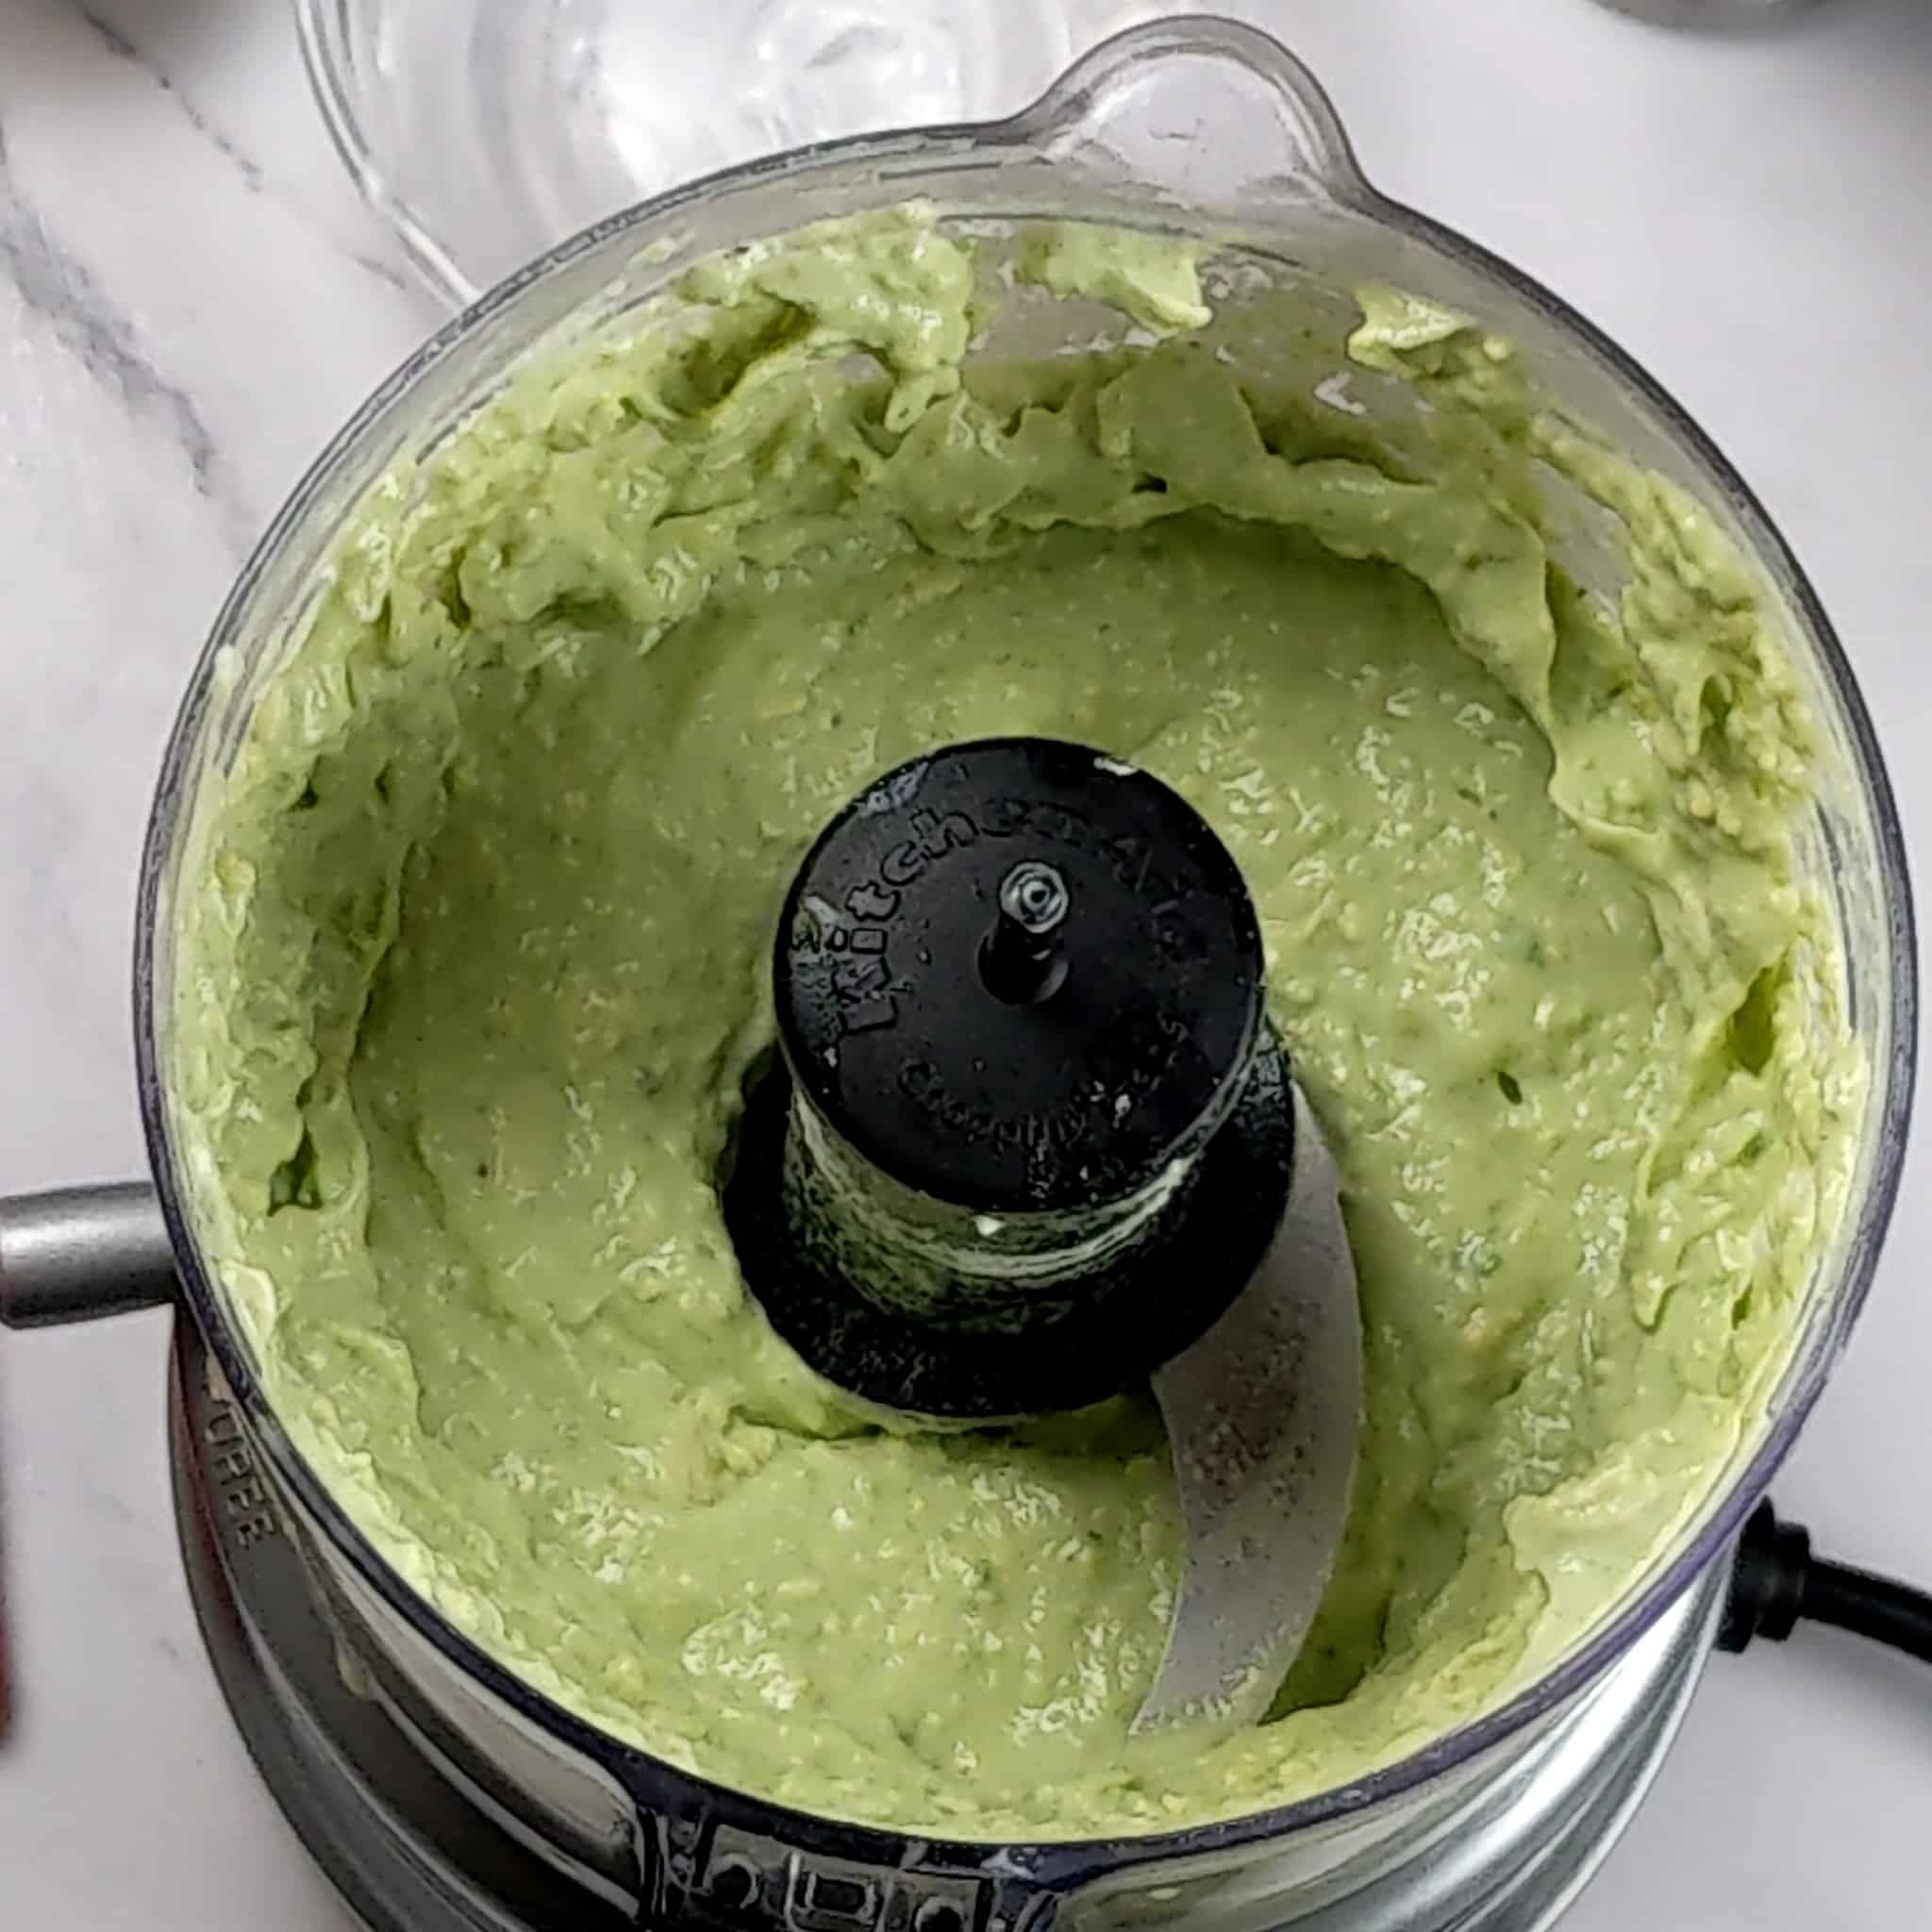 blended avocado cream in a kitchenaid food processor.